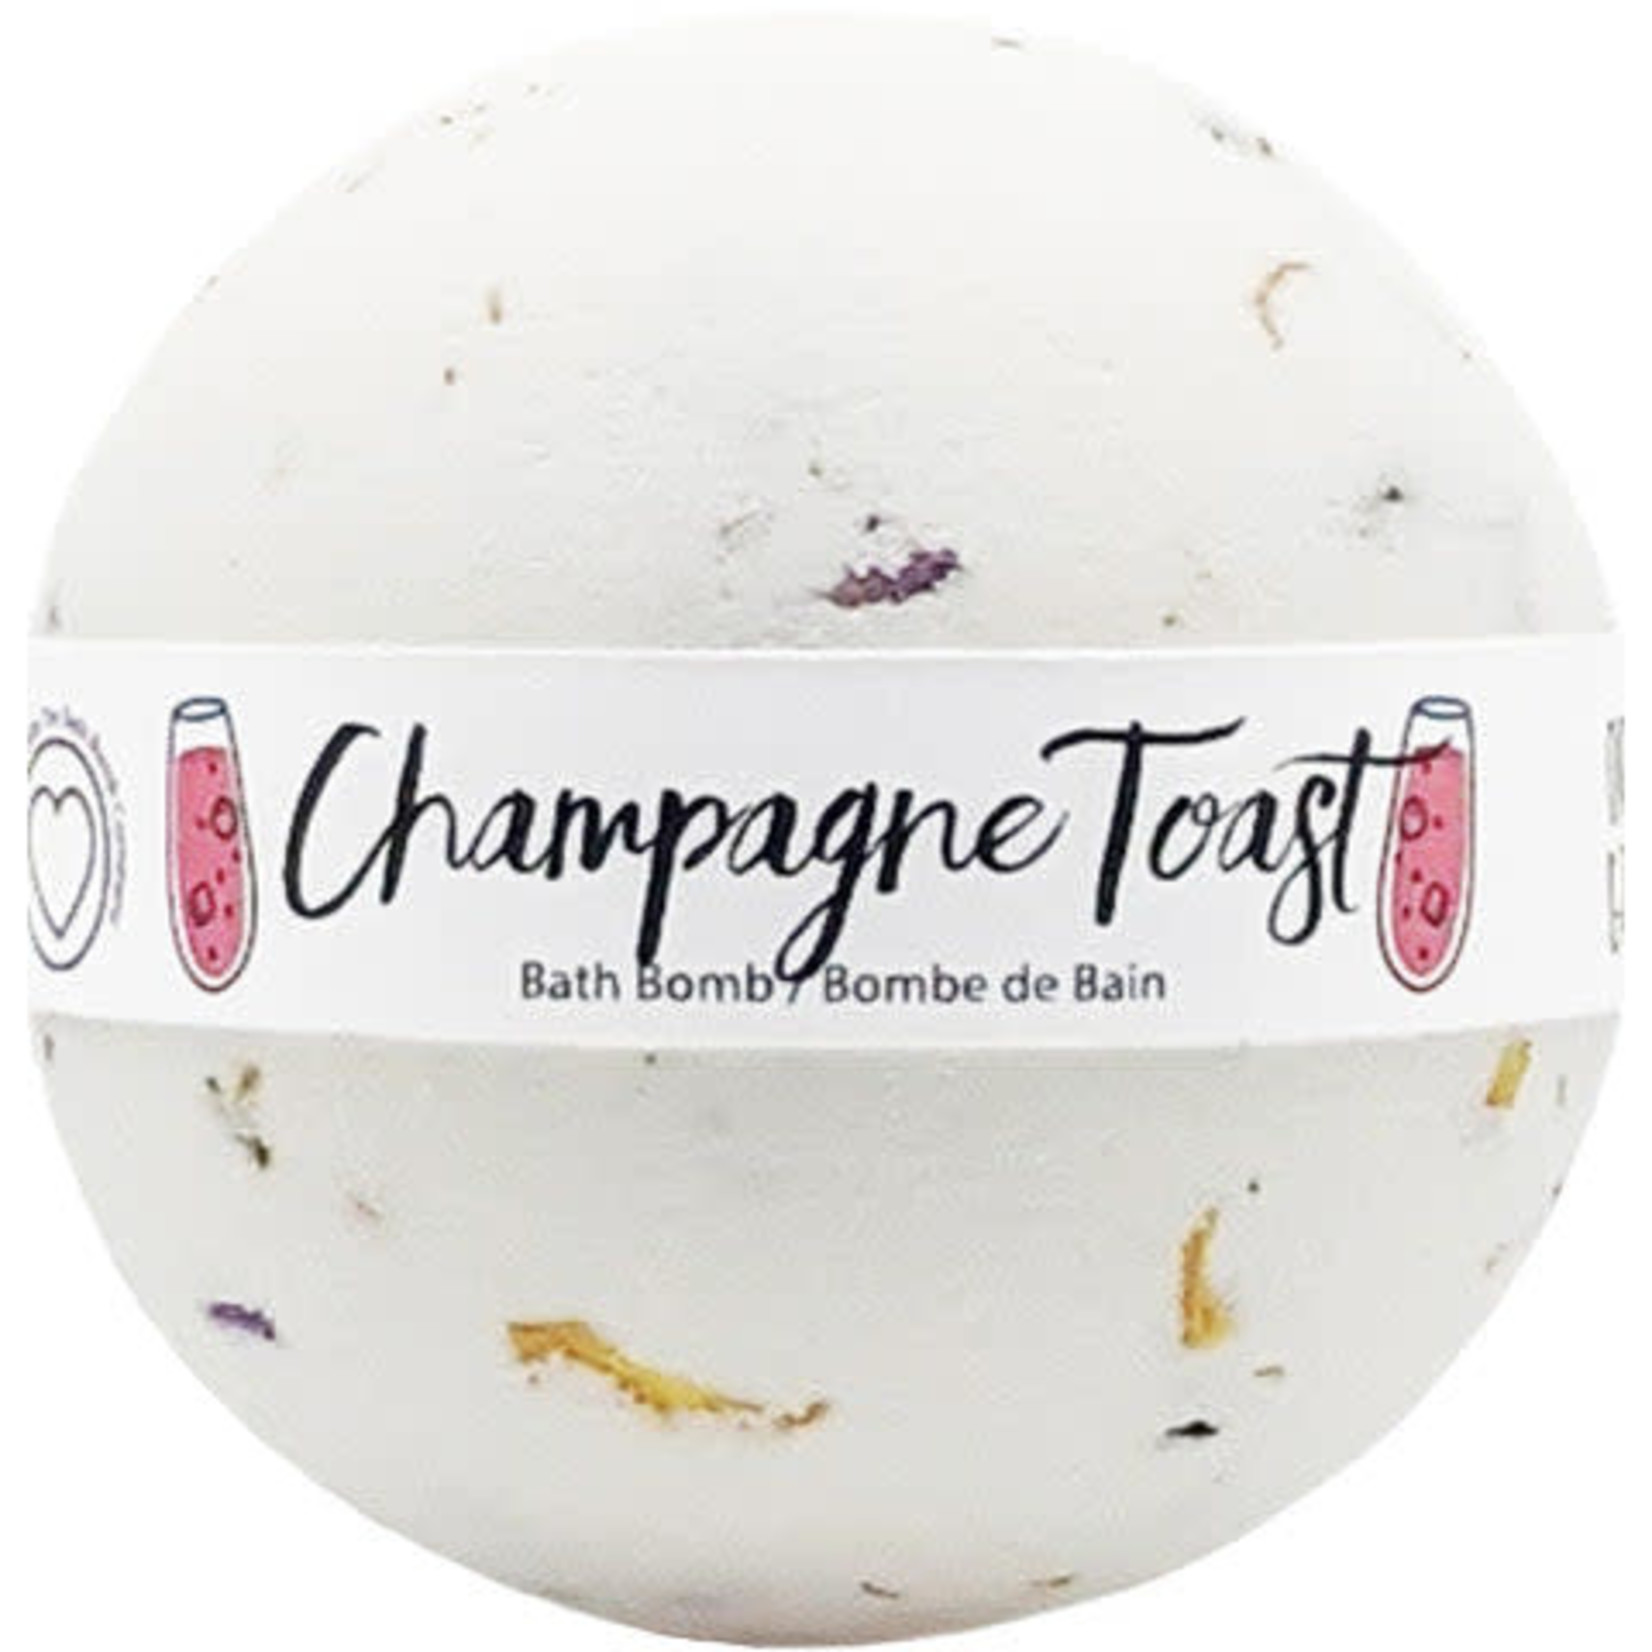 The Bath Bomb Champagne Toast Bath Bomb